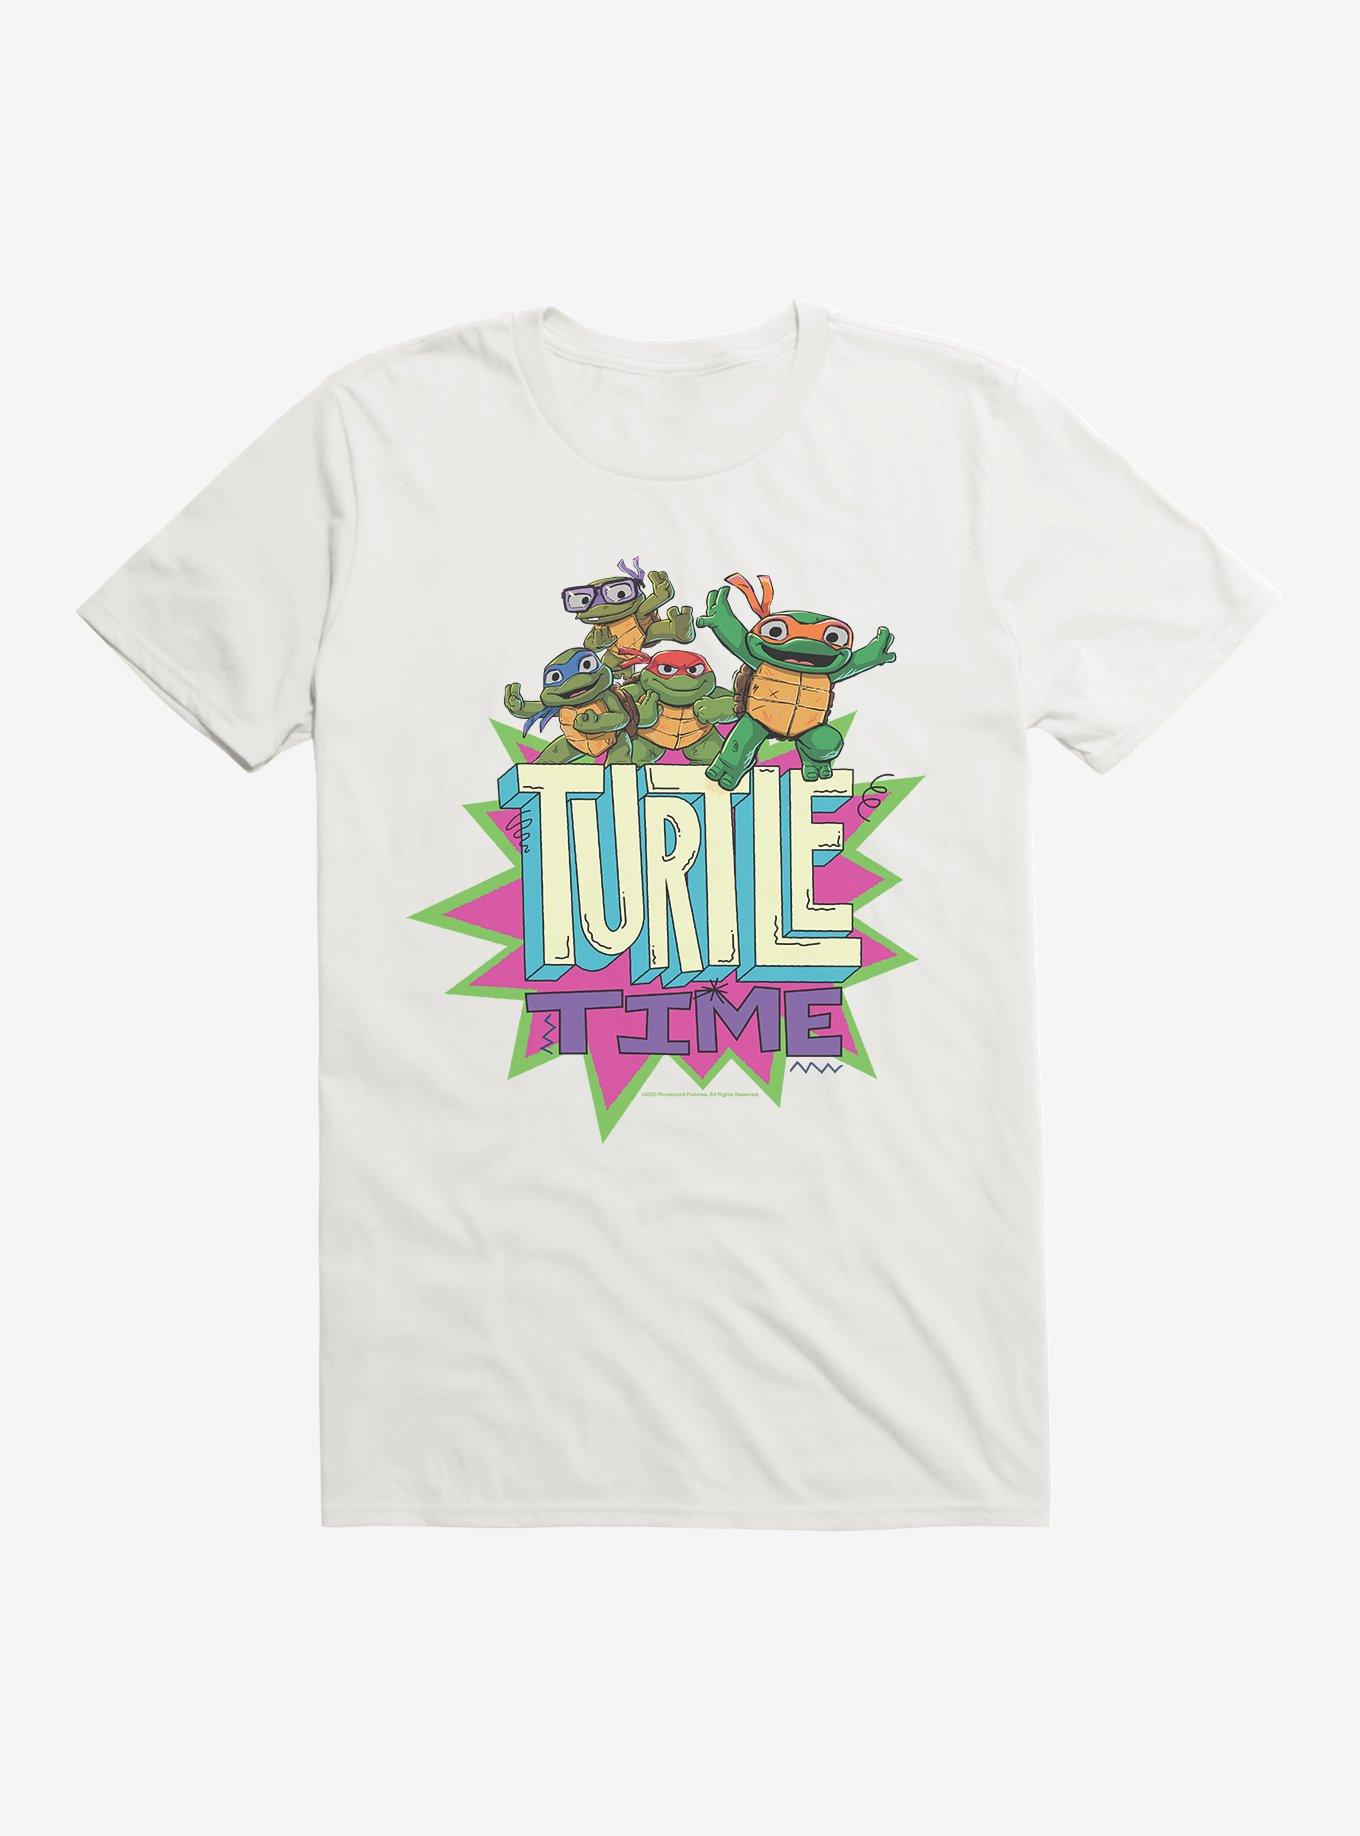 TMNT Ninja Turtles Mutant Mayhem T-Shirt 